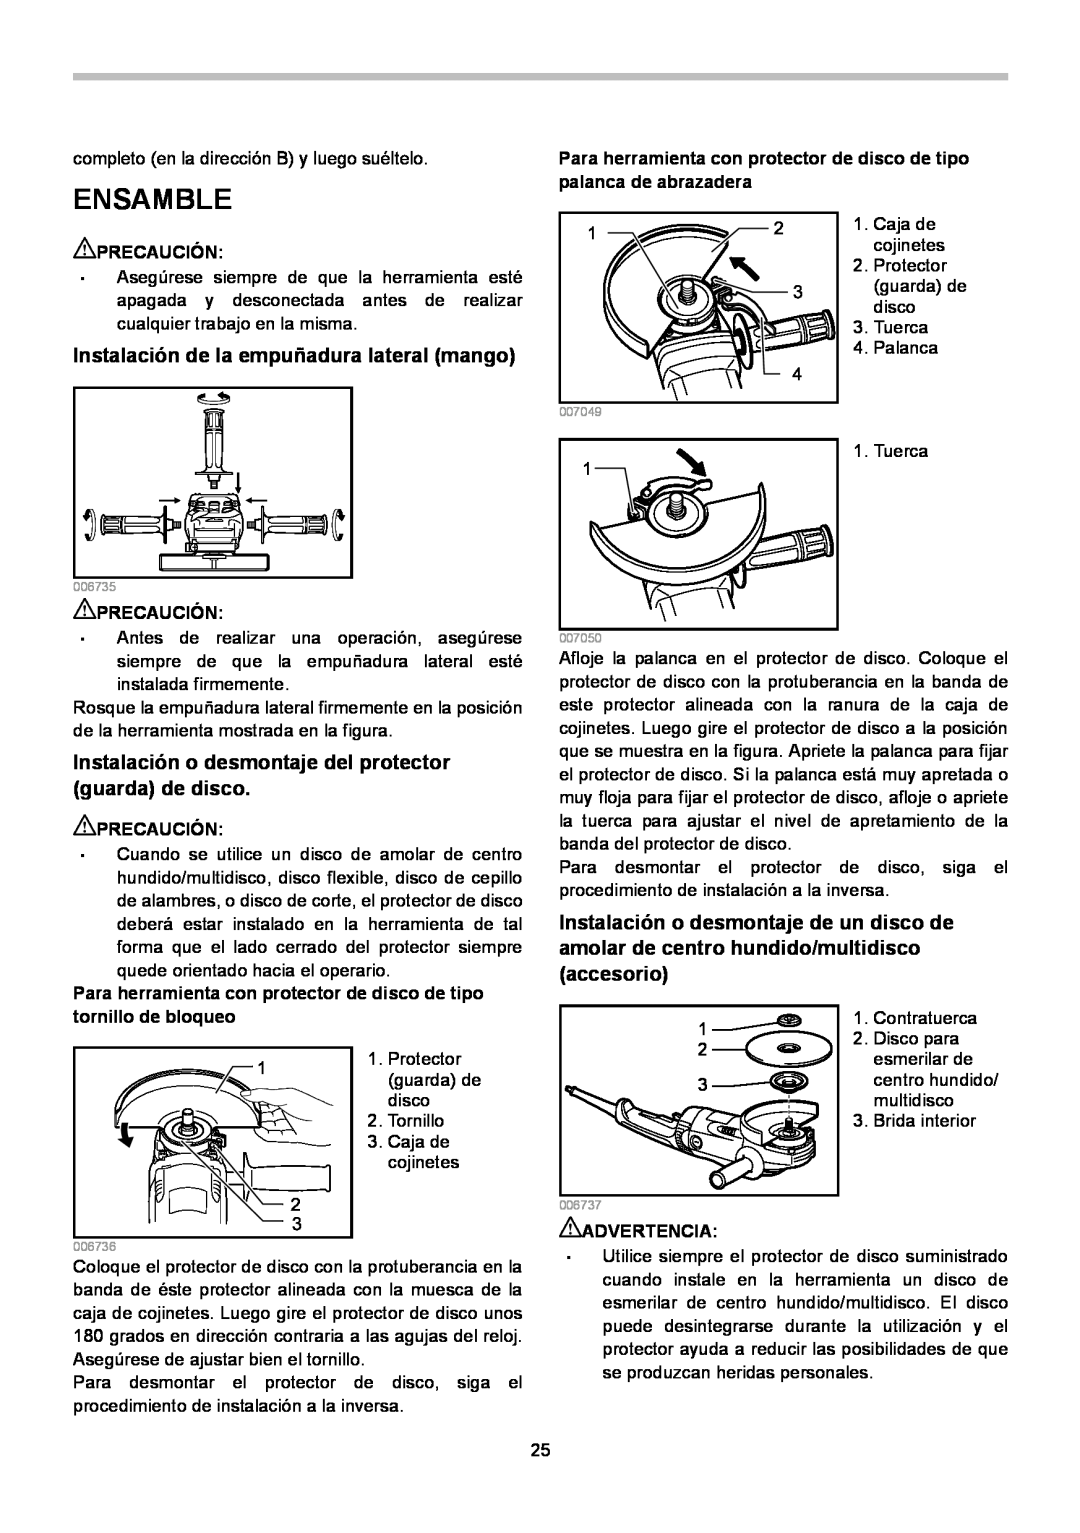 Makita GA7021, GA7020, GA9020 instruction manual Ensamble, Instalación de la empuñadura lateral mango 